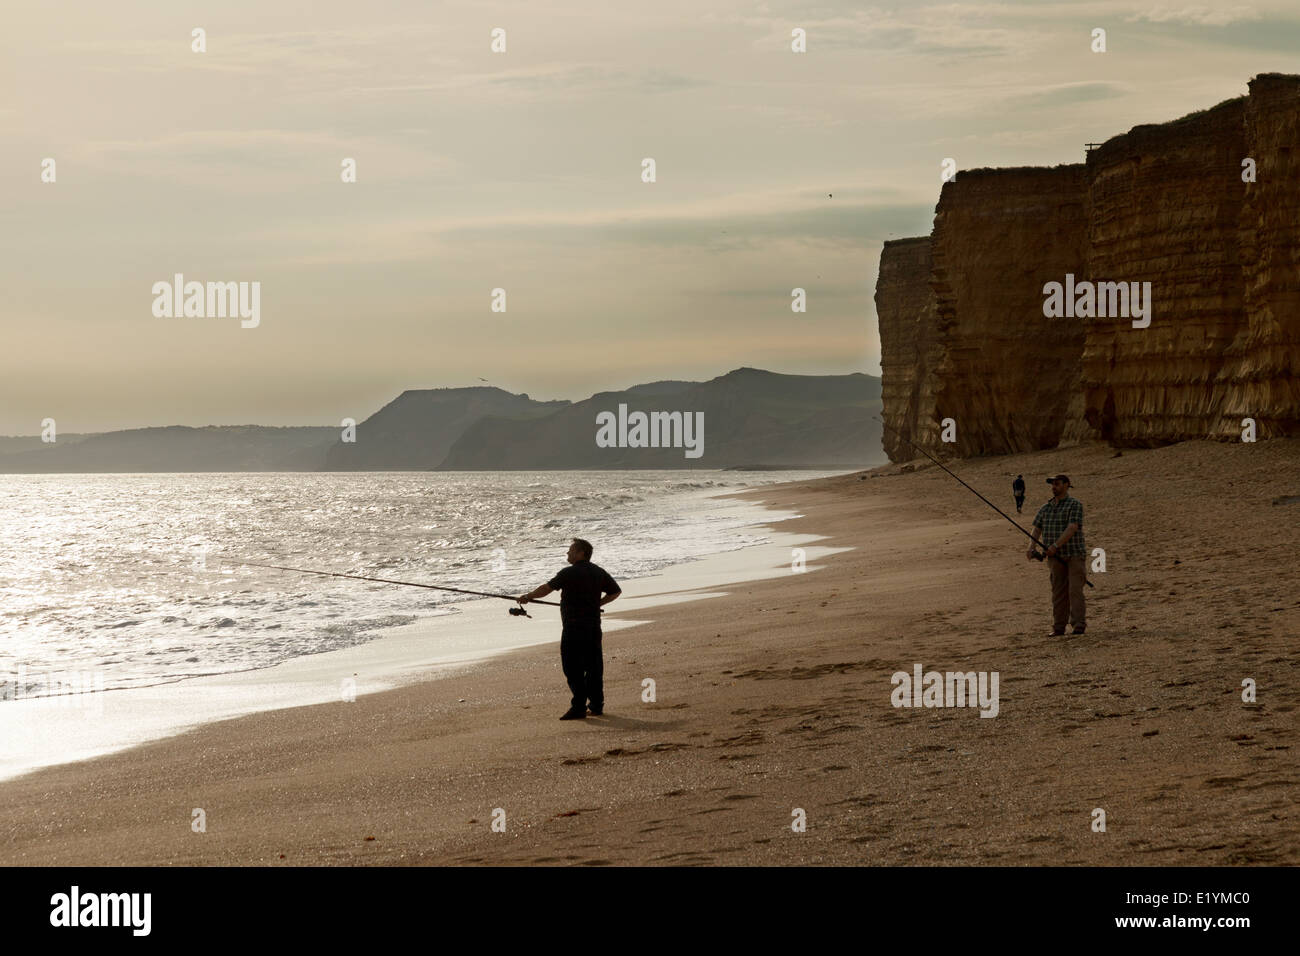 People fishing on the beach at sunset, Hive Beach, the Jurassic Coast, Dorset England UK Stock Photo